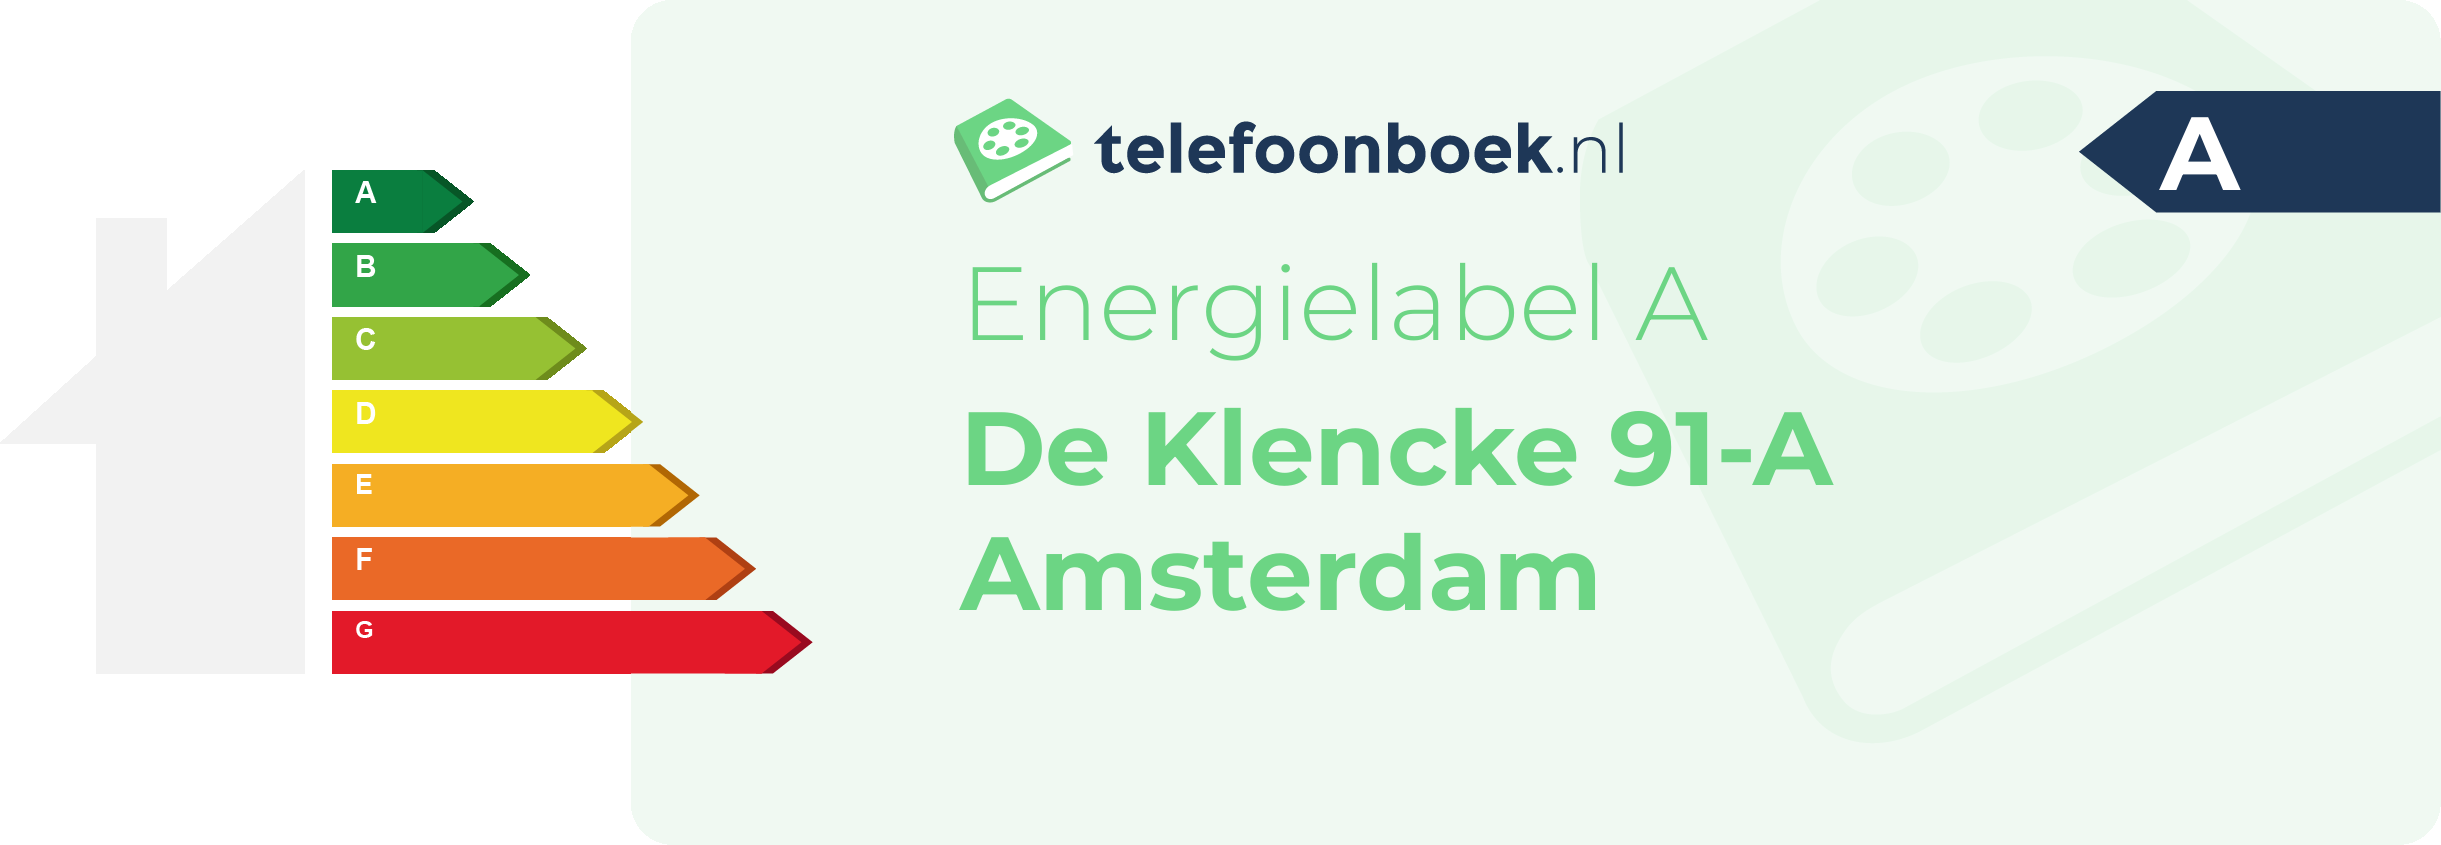 Energielabel De Klencke 91-A Amsterdam